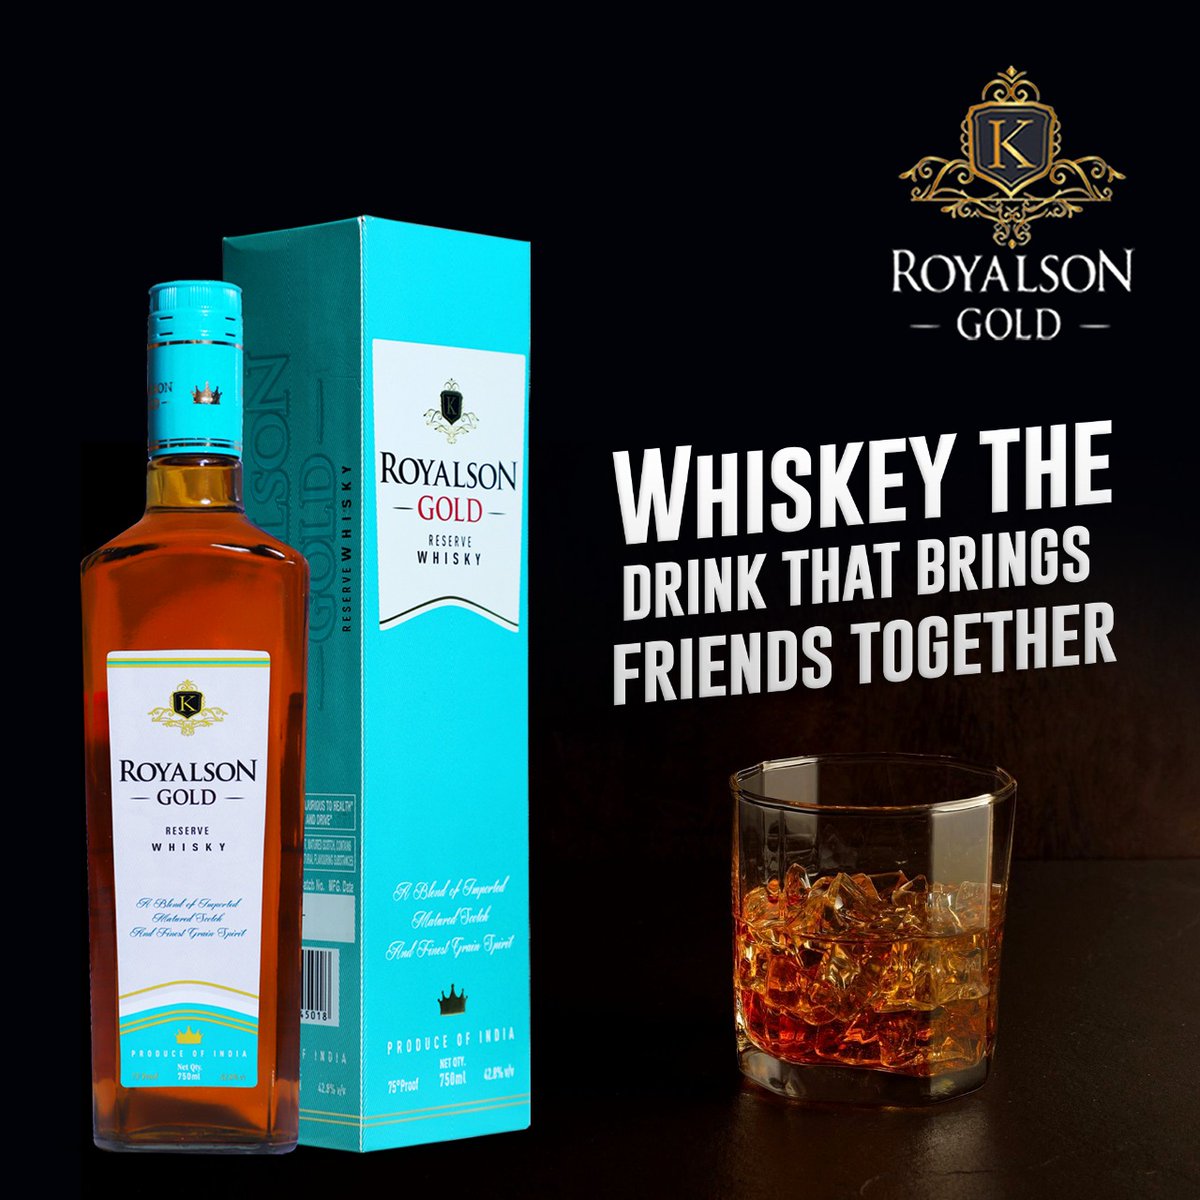 WHISKEY THE DRINK THAT BRINGS FRIENDS TOGETHER!
.
.
.
#whiskycommunity #whiskeygram #whiskey #whiskeylifestyle #whiskeylife #royallifestyle #royalsongoldreserve #Kalaambdistillery #blendedscotchwhisky #indianwhiskey #roaylty #celebrationpartner #whiskeygram  #indianmalt